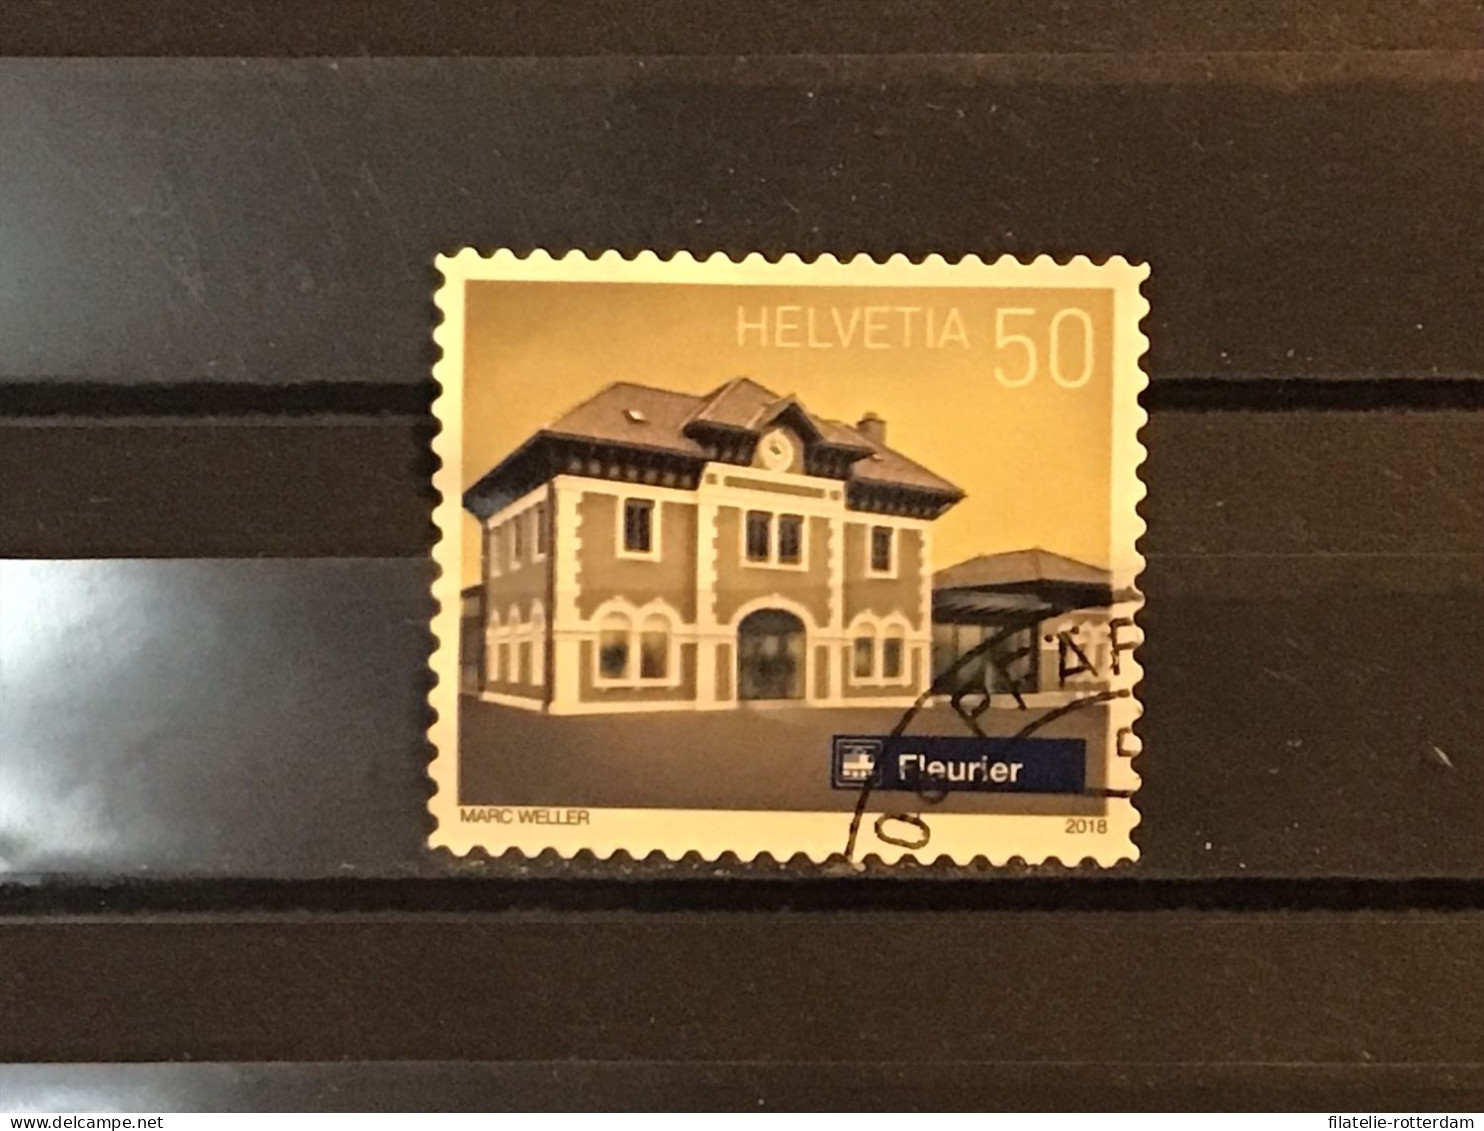 Switzerland / Zwitserland - Train Stations (50) 2018 - Used Stamps